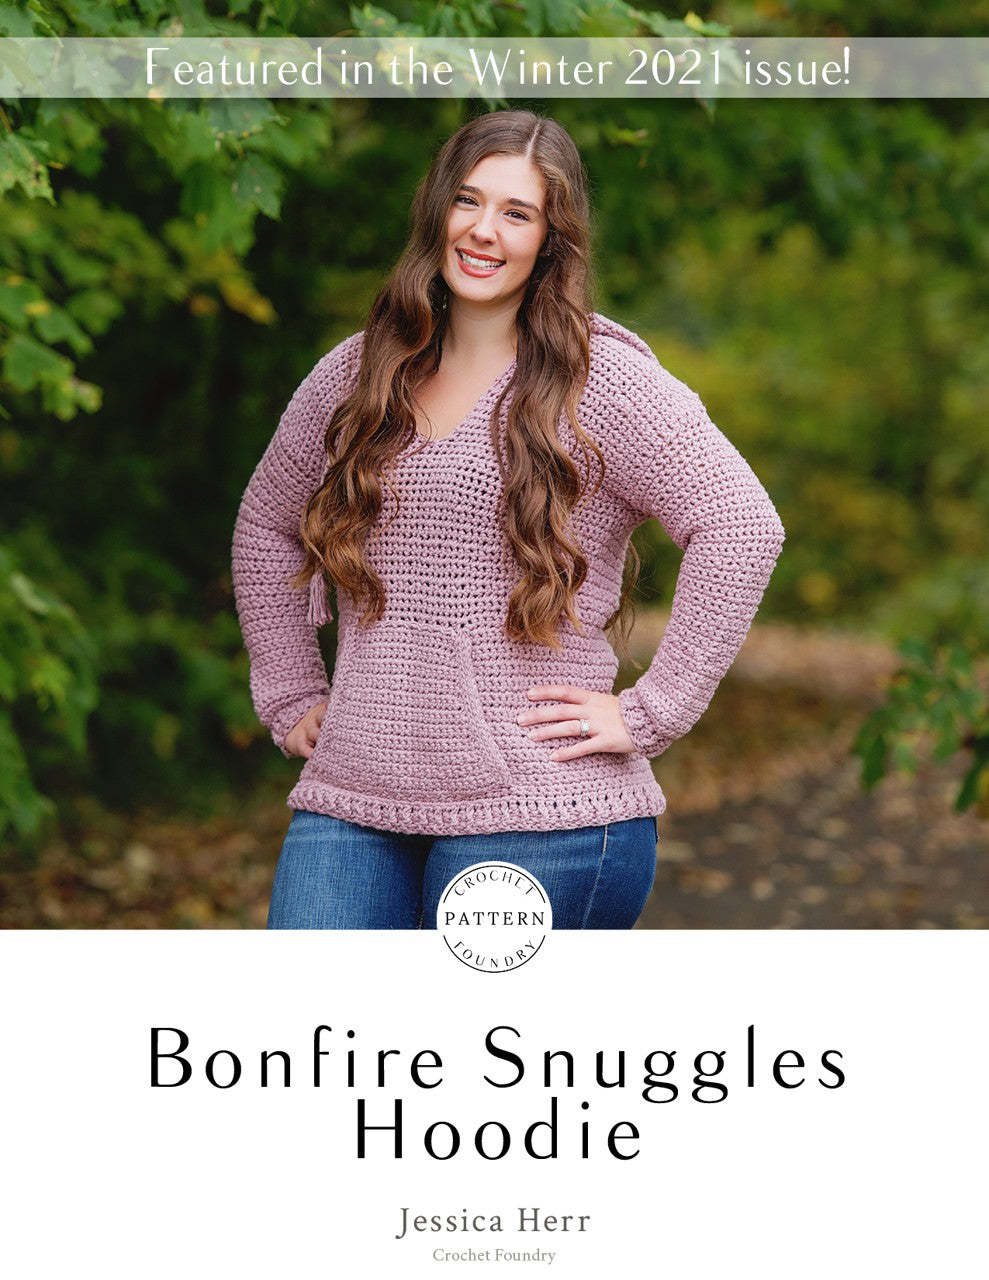 Bonfire Snuggles Hoodie Crochet PDF Pattern by Jessica Herr